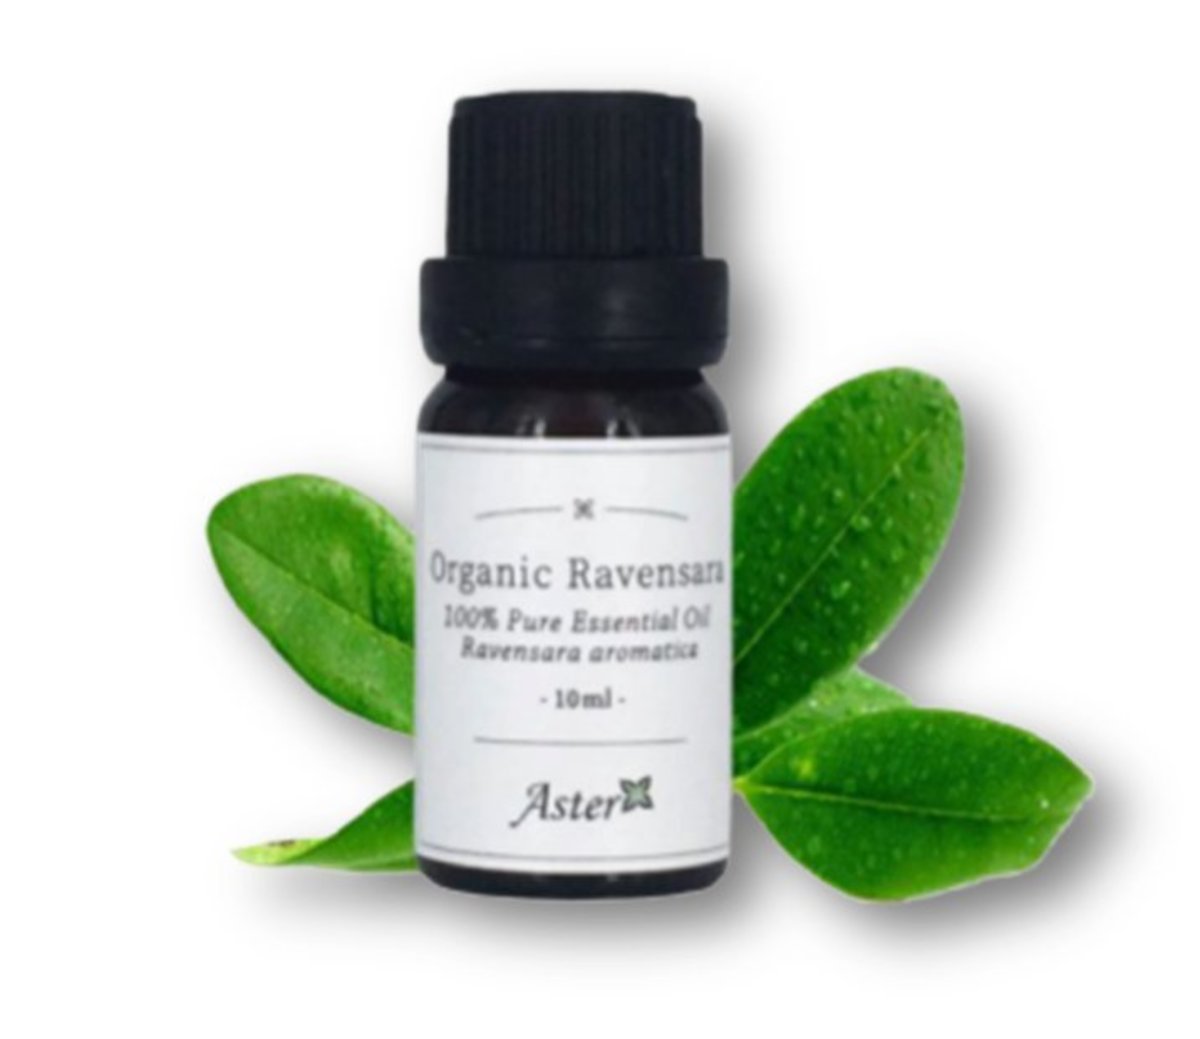 Organic Ravensara Essential Oil (Ravensara aromatica) - 10ml